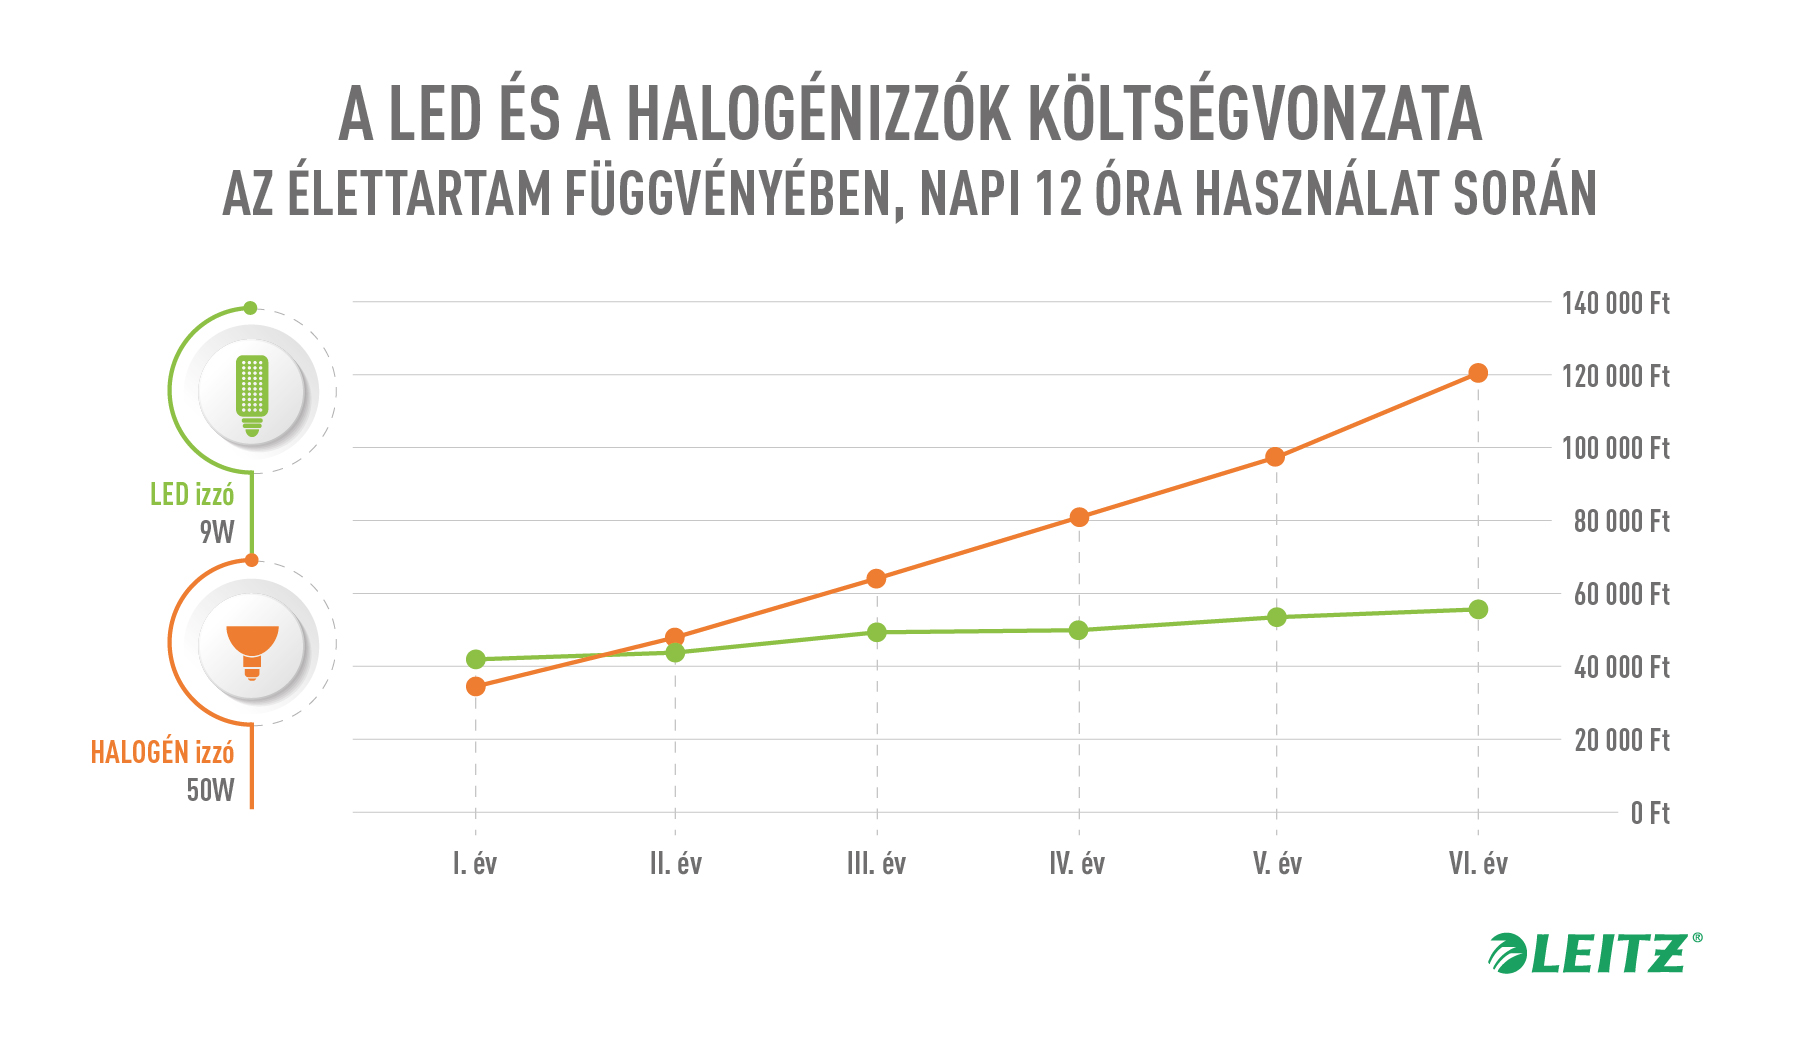 Led_halogen_izzok_koltsegvonzata-Leitz_infografika